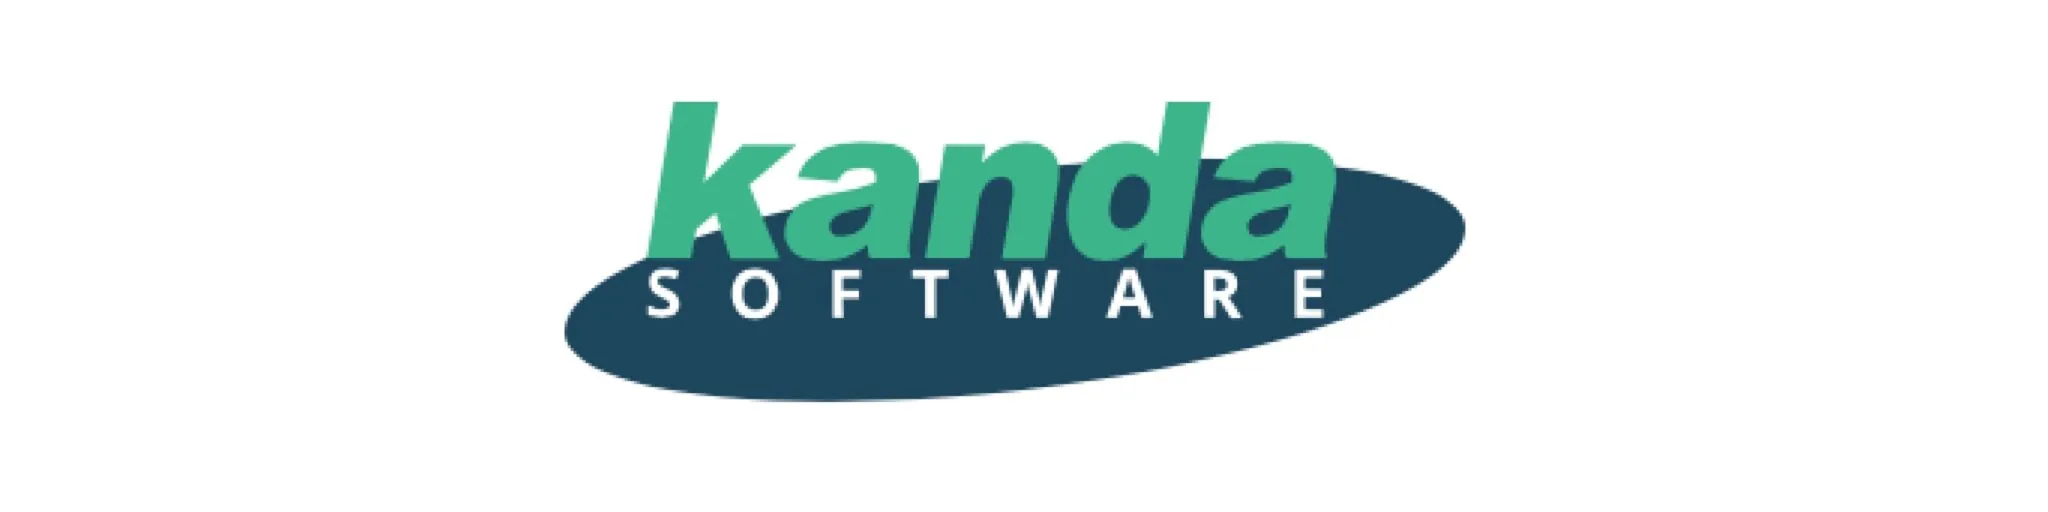 Kanda Software as a Top Healthcare Software Development Company